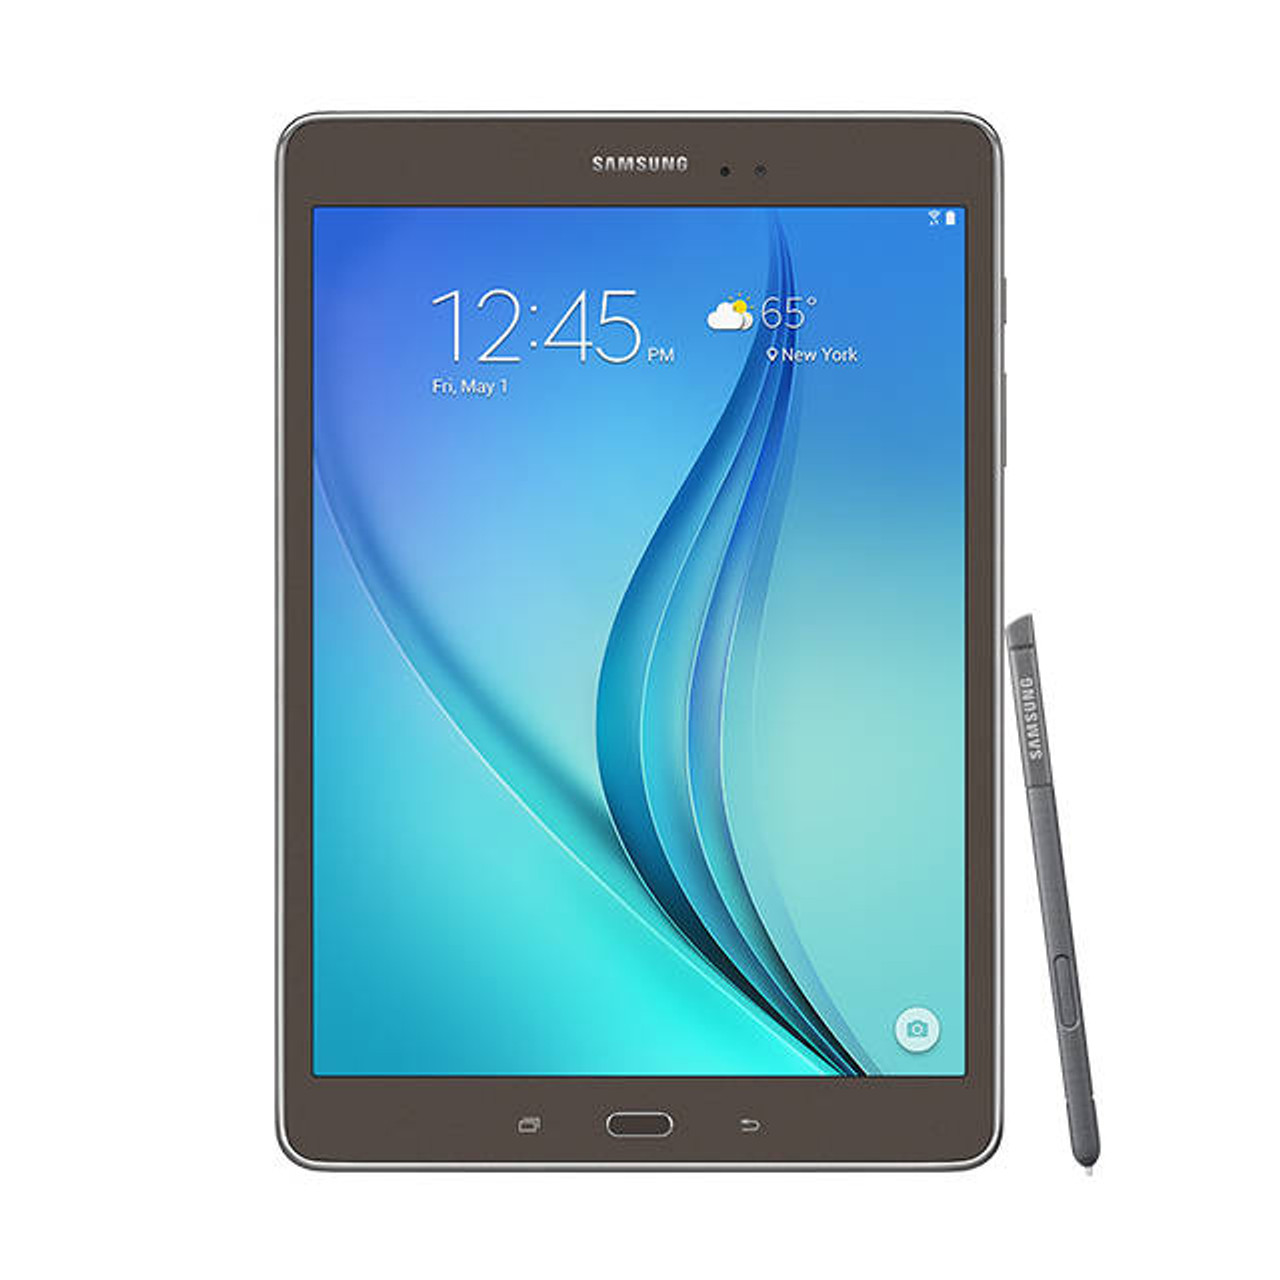 Samsung Galaxy Tab A SM-P550NZAAXAR 9.7 inch Qualcomm APQ 8016 1.2GHz/ 16GB/ Android 5.0 Lollipop Tablet (Smokey Titanium)